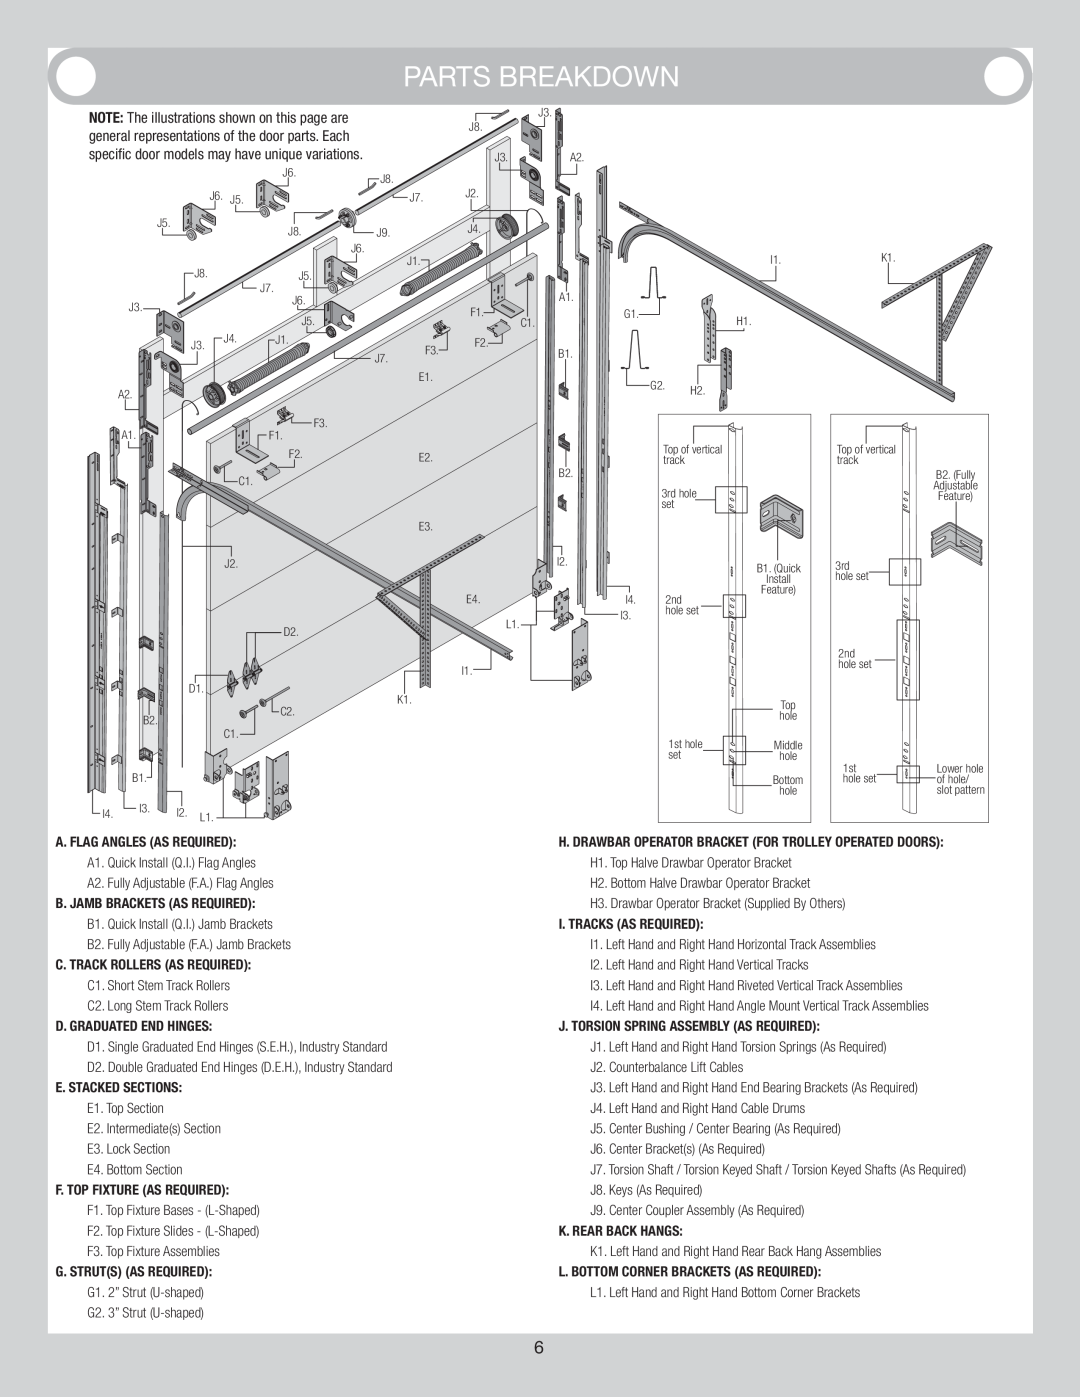 Wayne-Dalton 8300/8500 installation instructions Parts Breakdown 